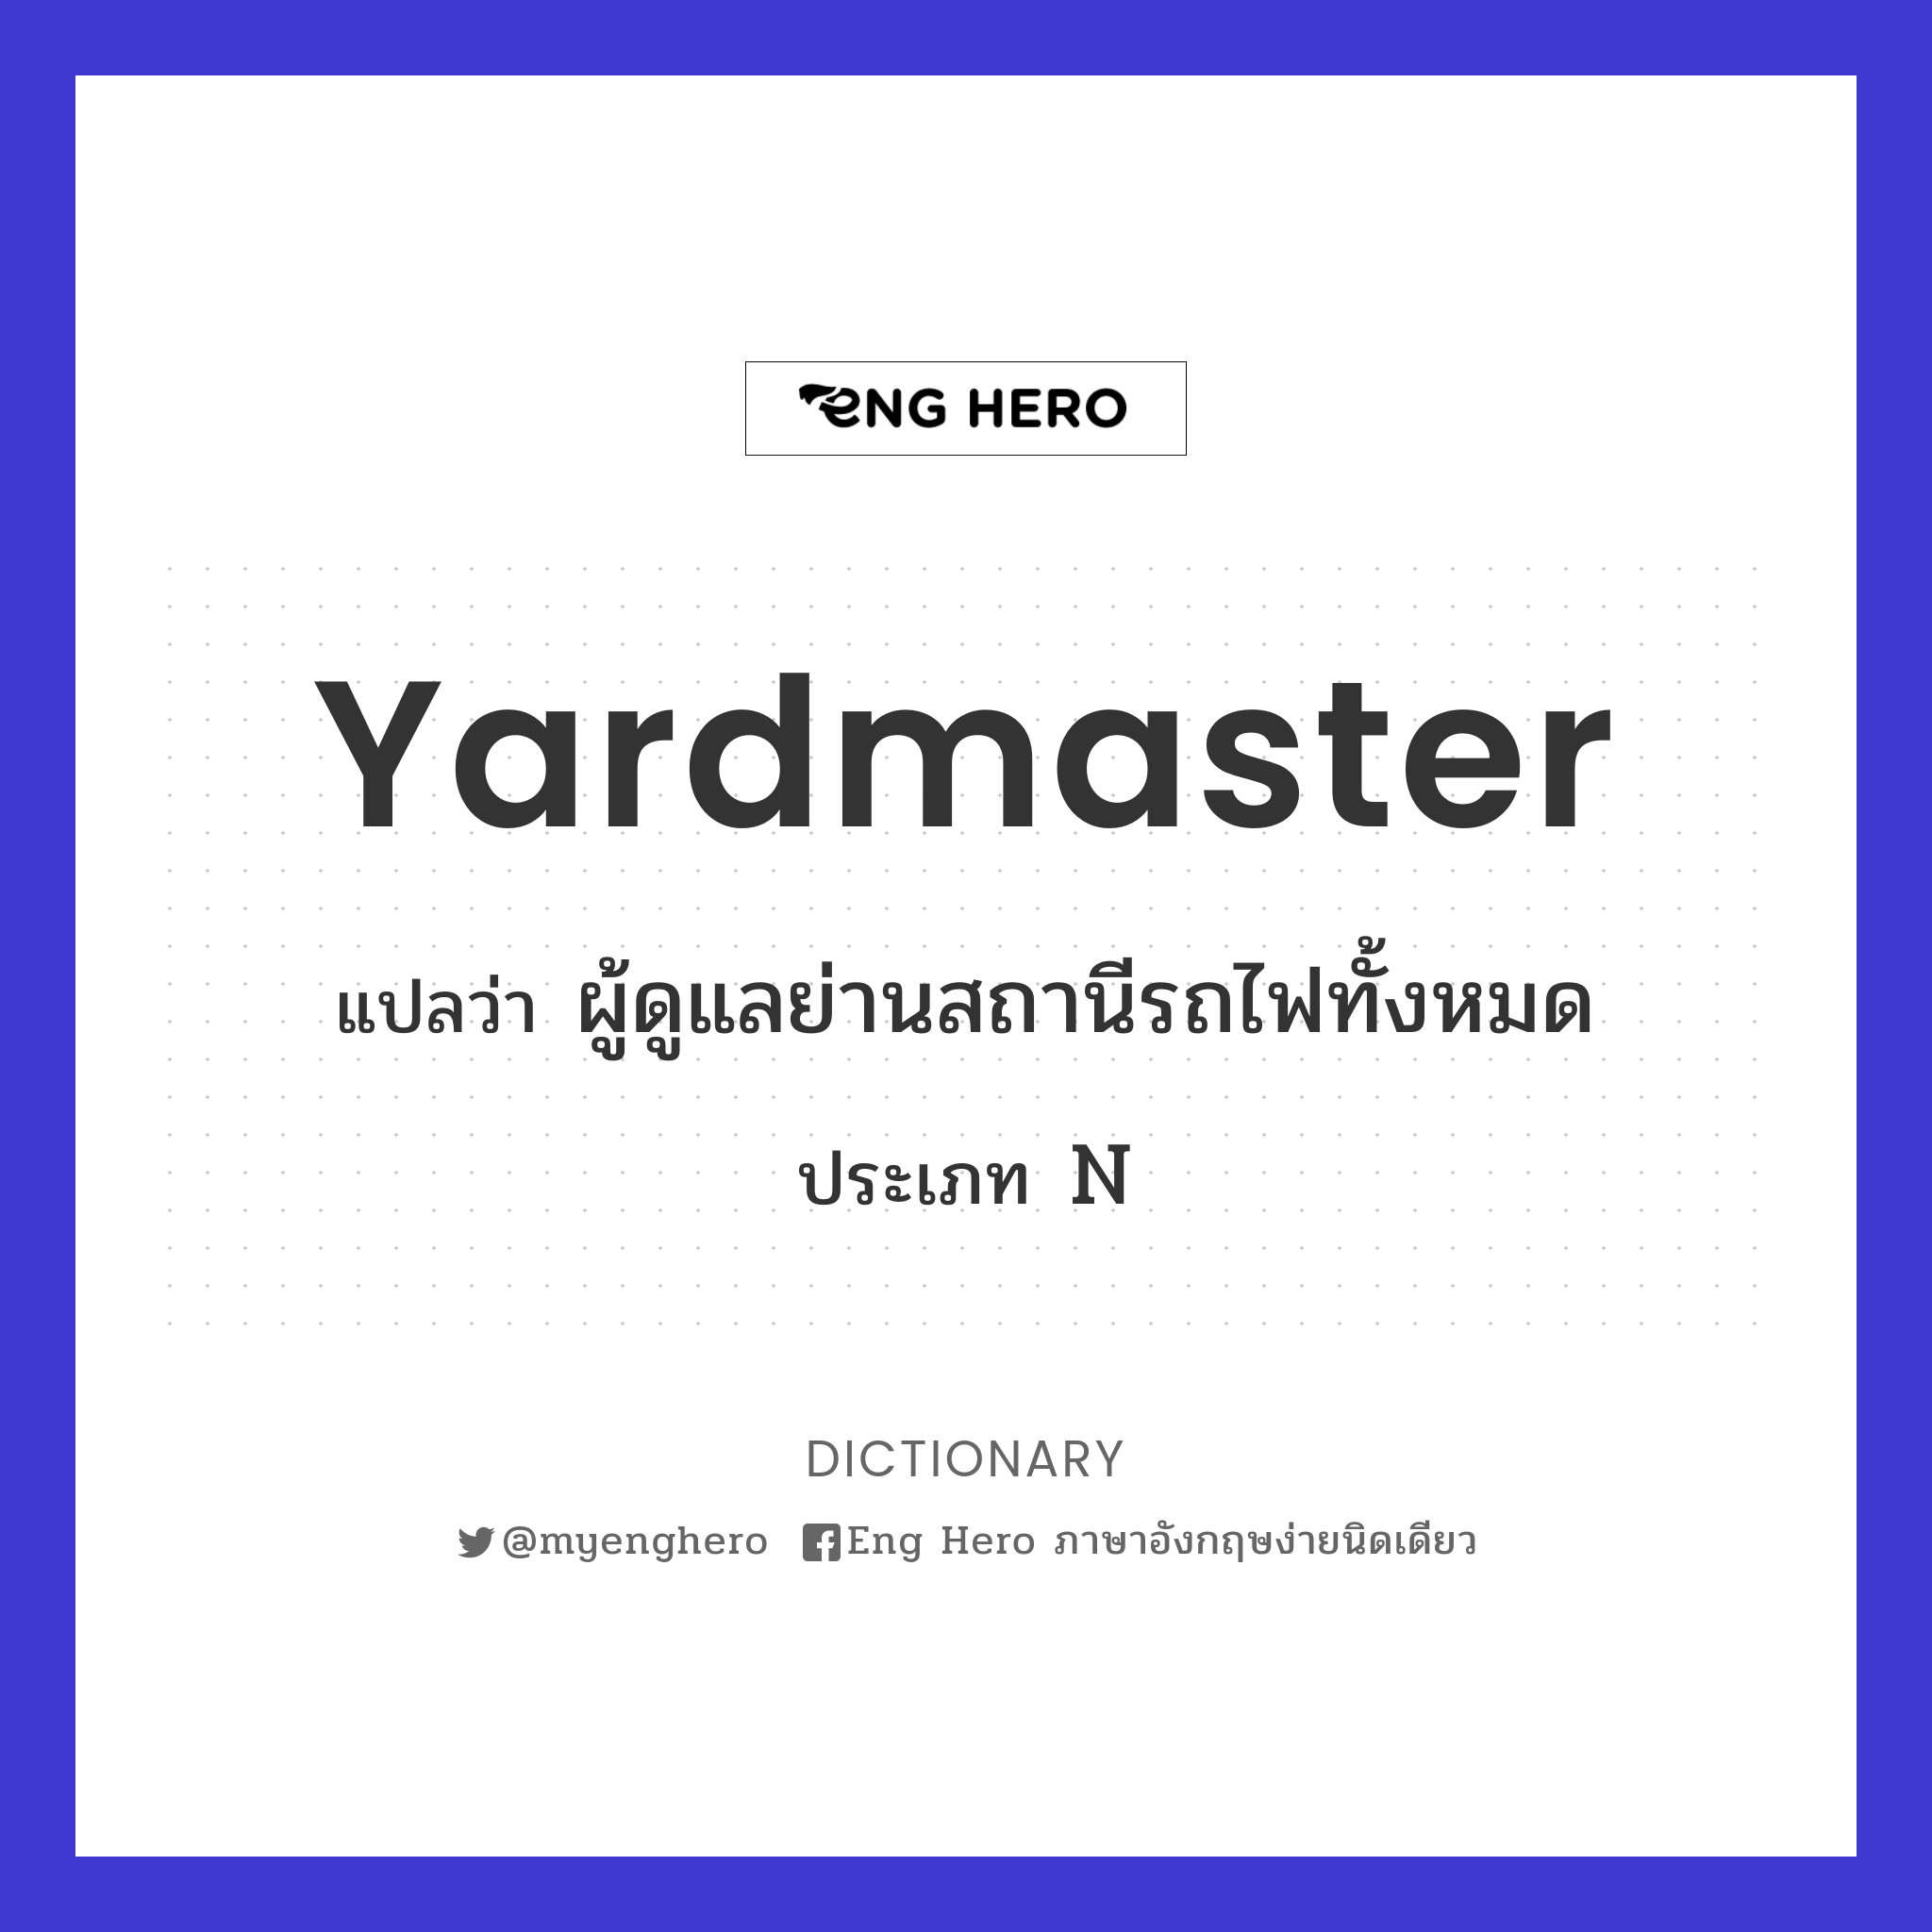 yardmaster